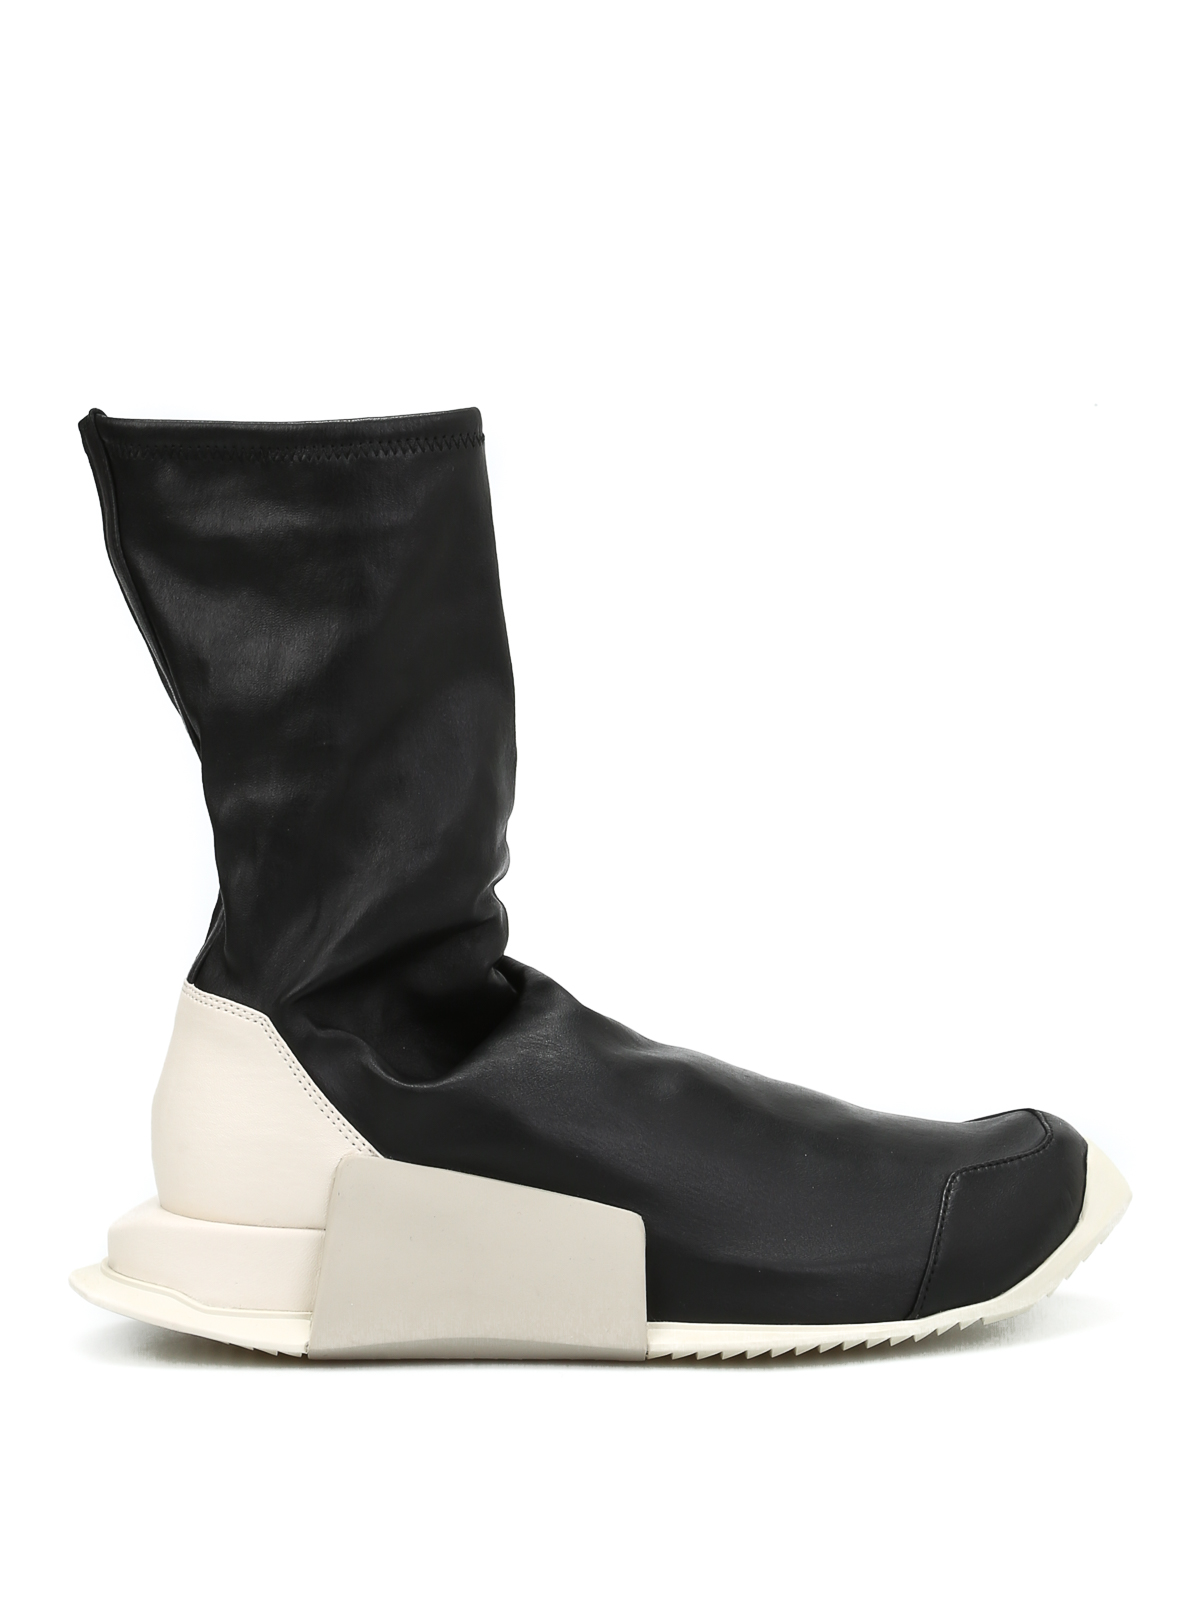 adidas sock boot